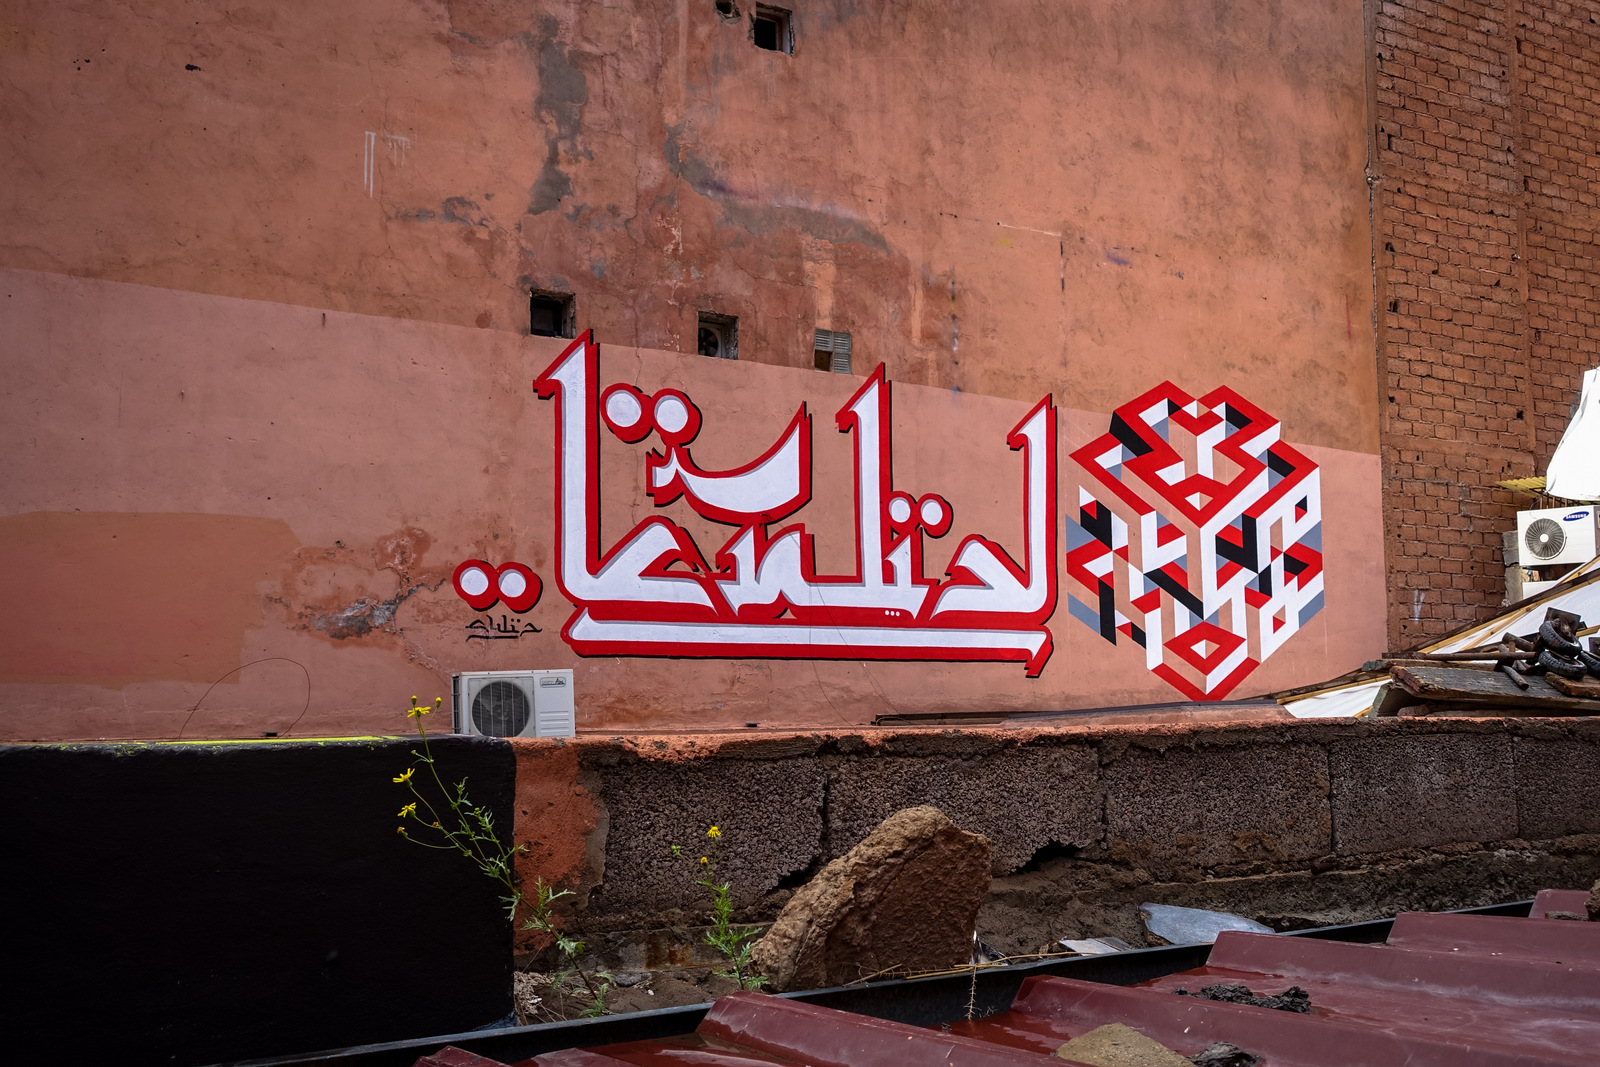 murals kofie lx.one, URBANPRESENTS & swizz gueliz, in marrakesh |